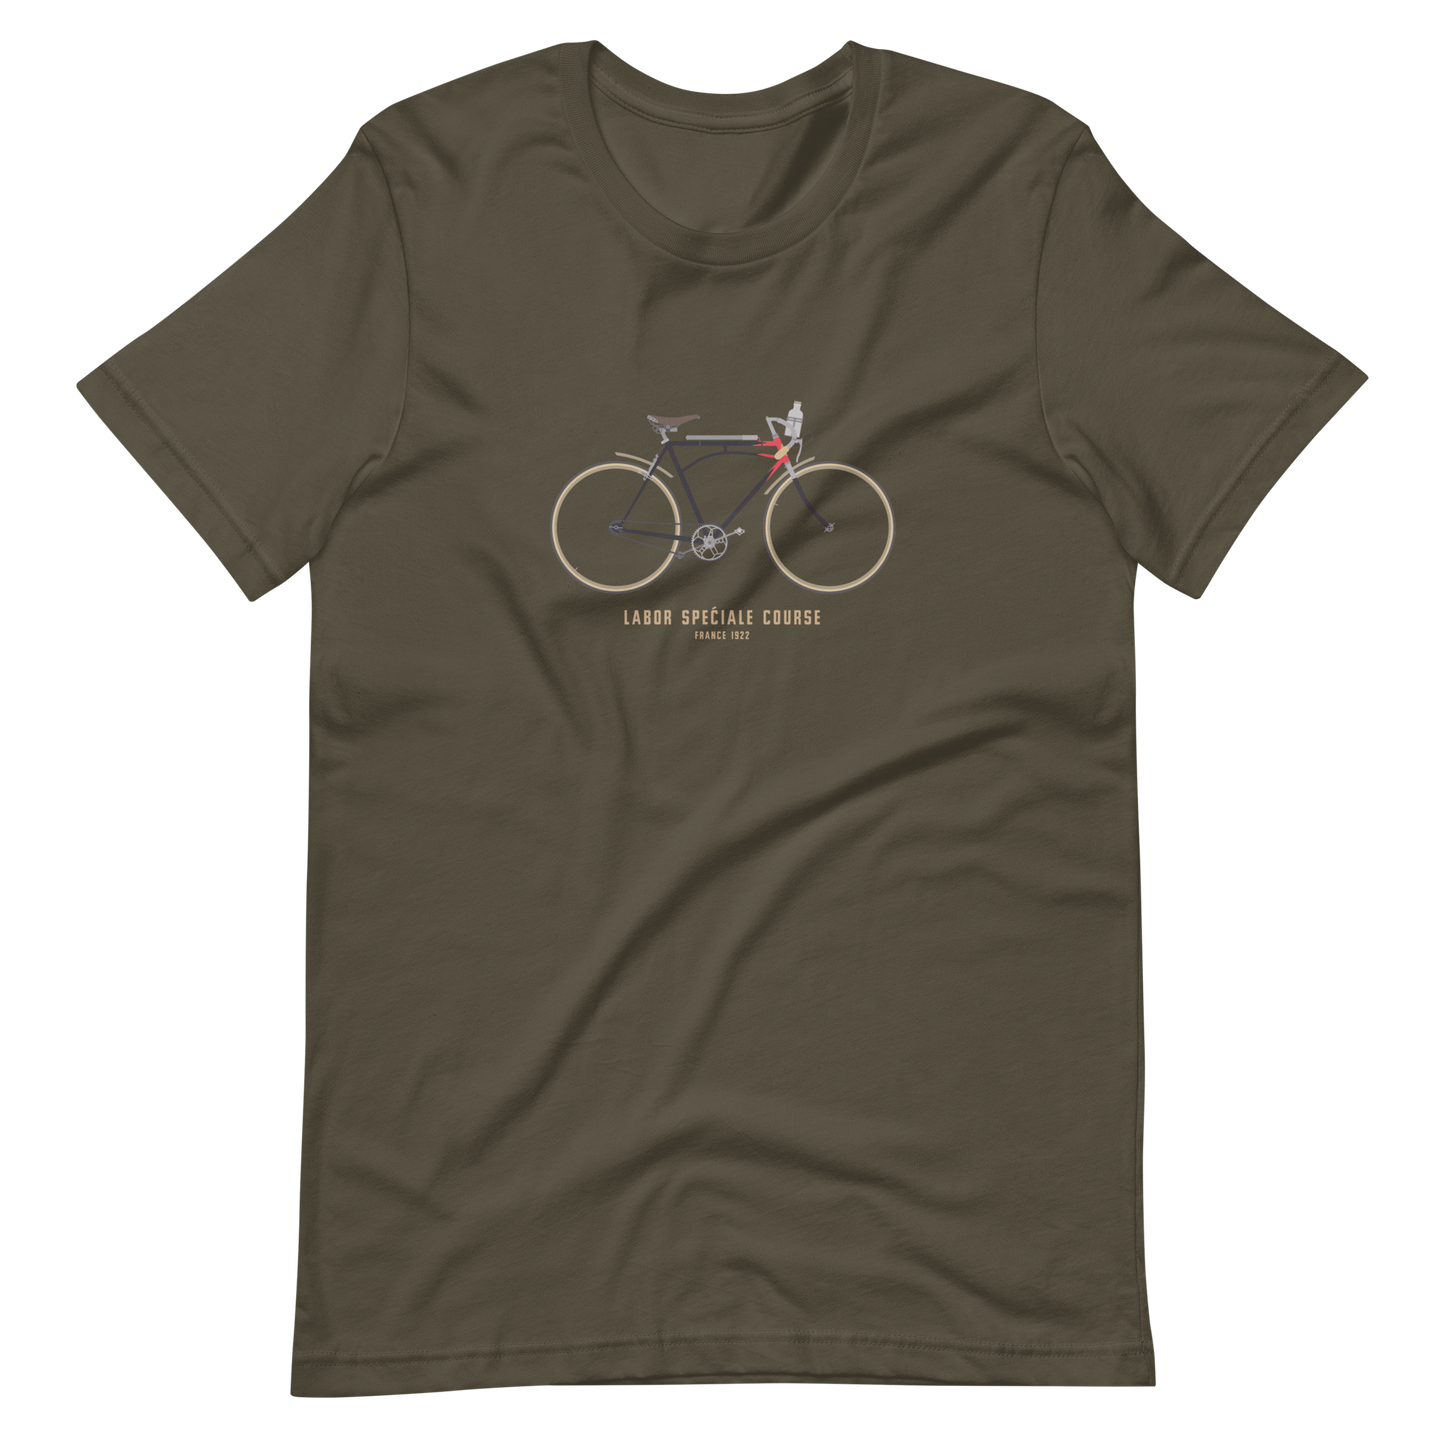 T-Shirt Labor Speciale Course Fahrrad, 1922